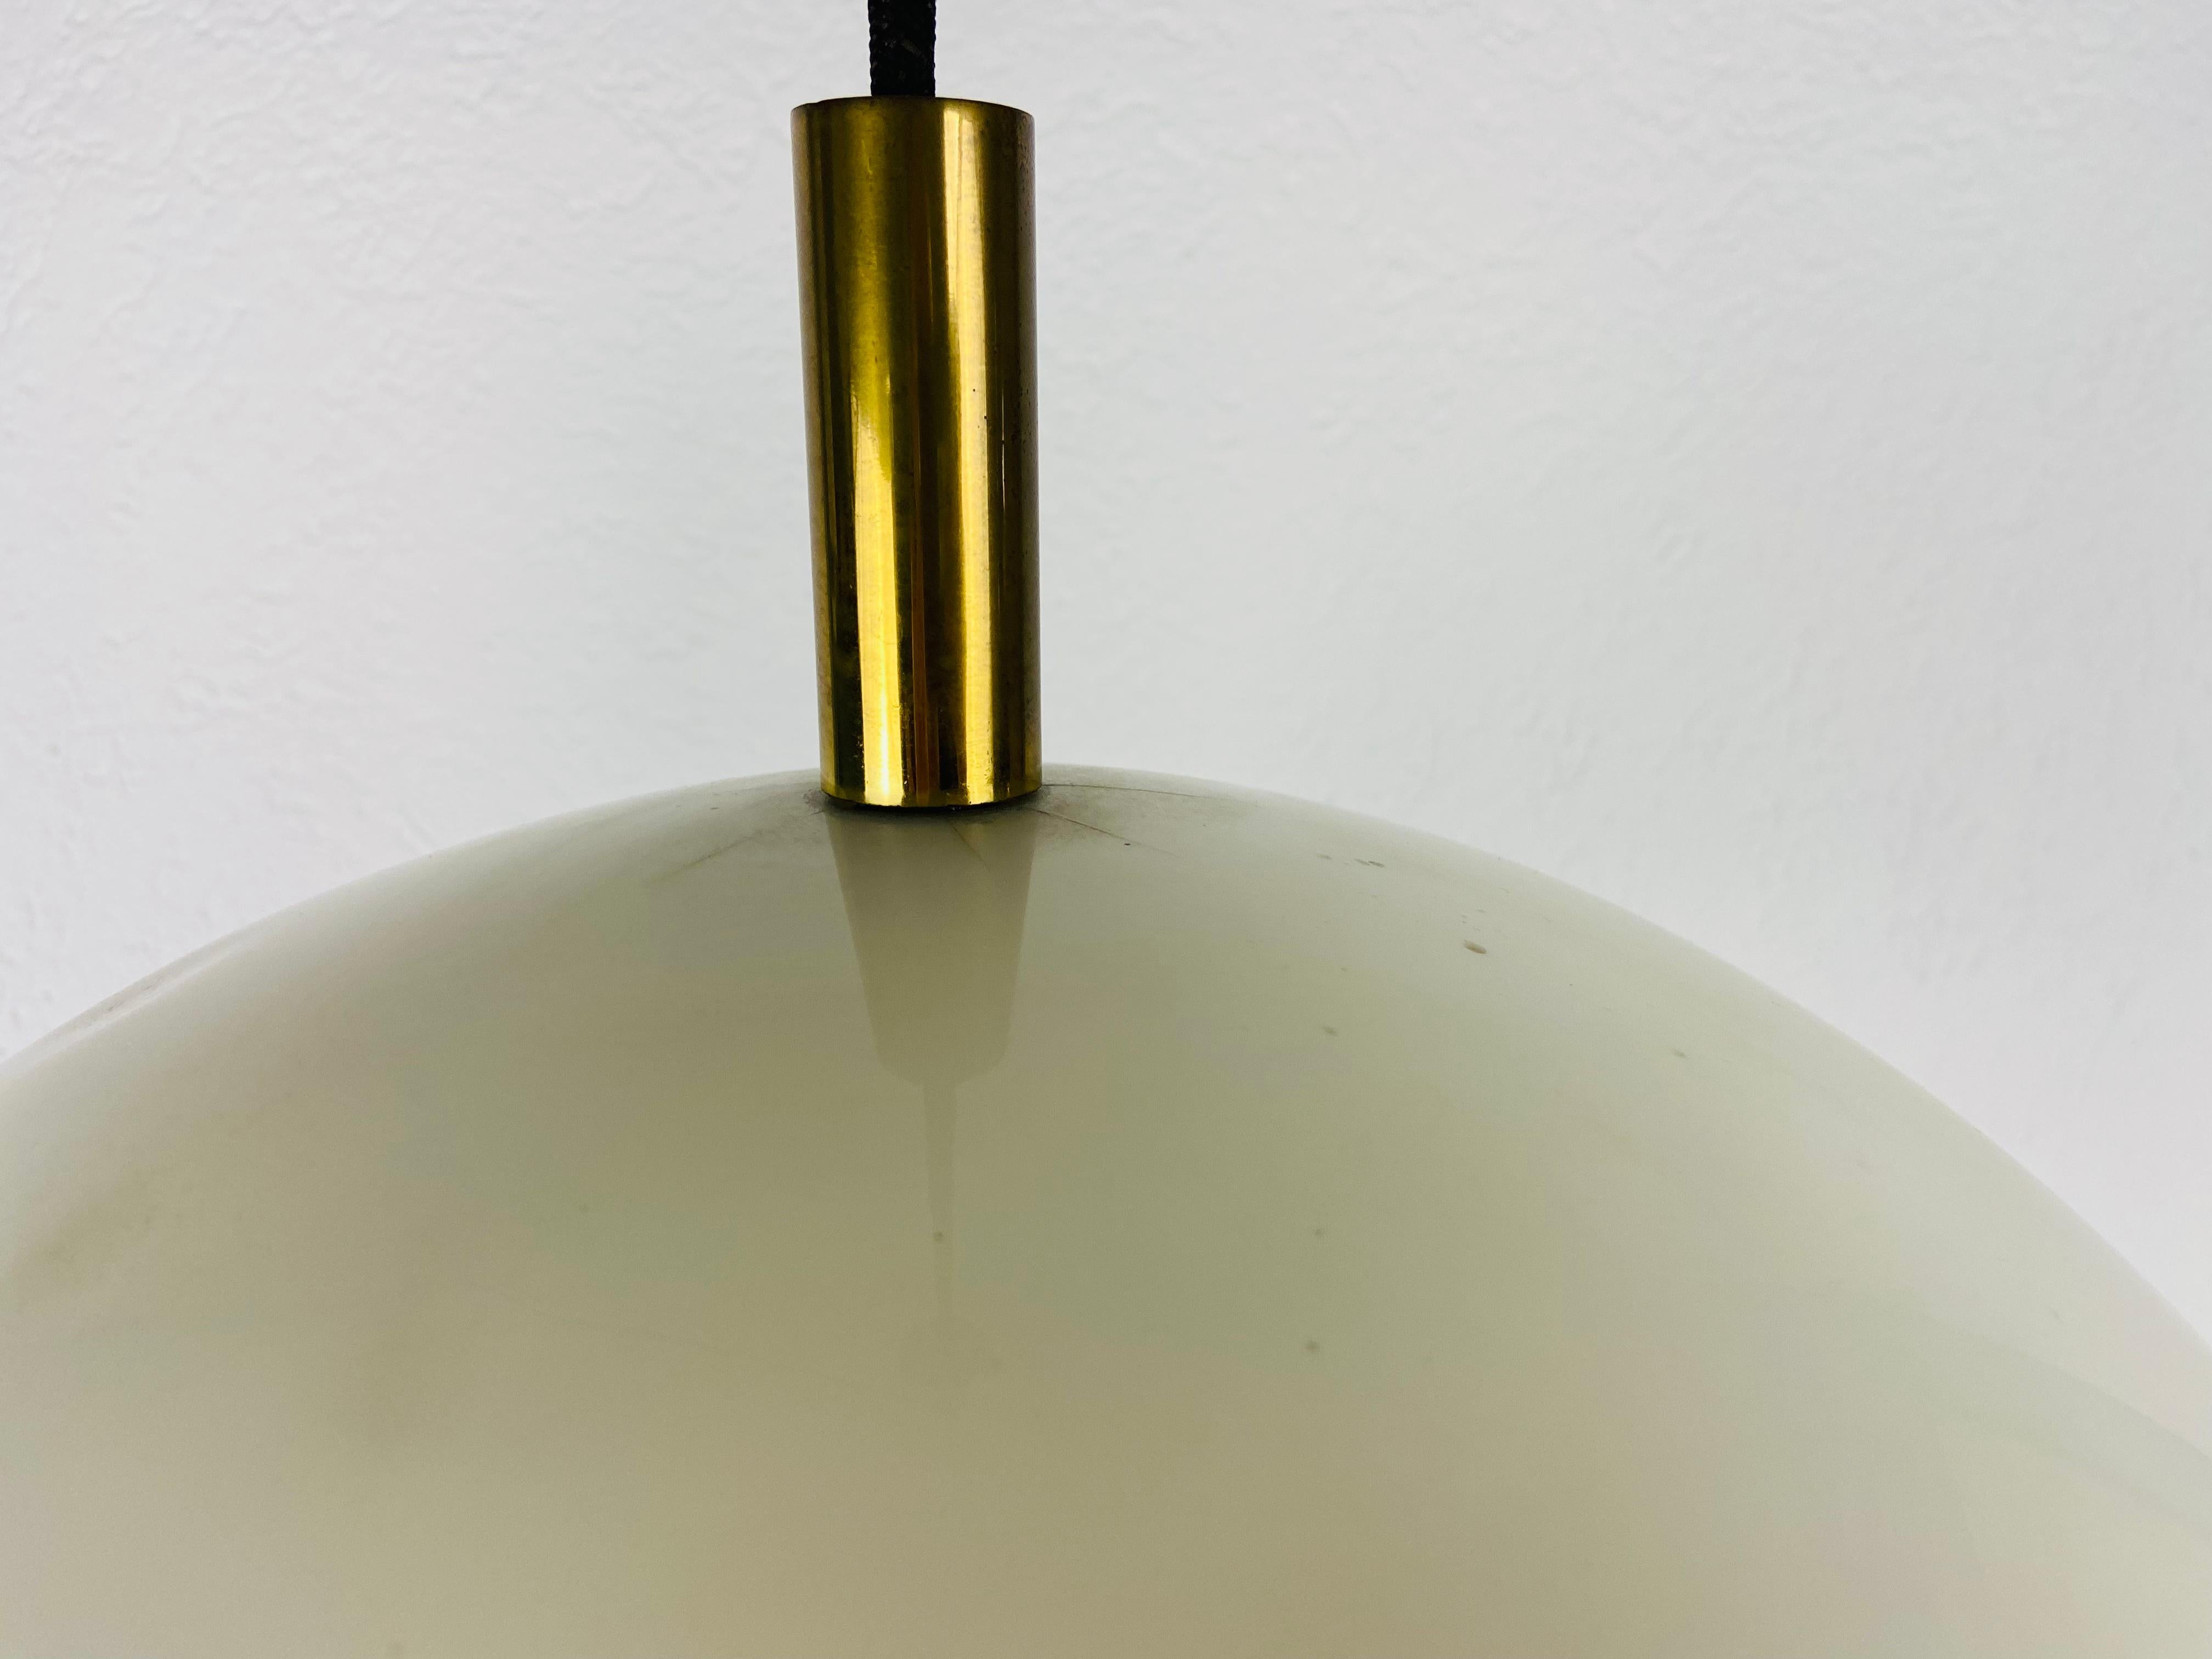 Midcentury Plexiglass Pendant Lamp, 1960s For Sale 1